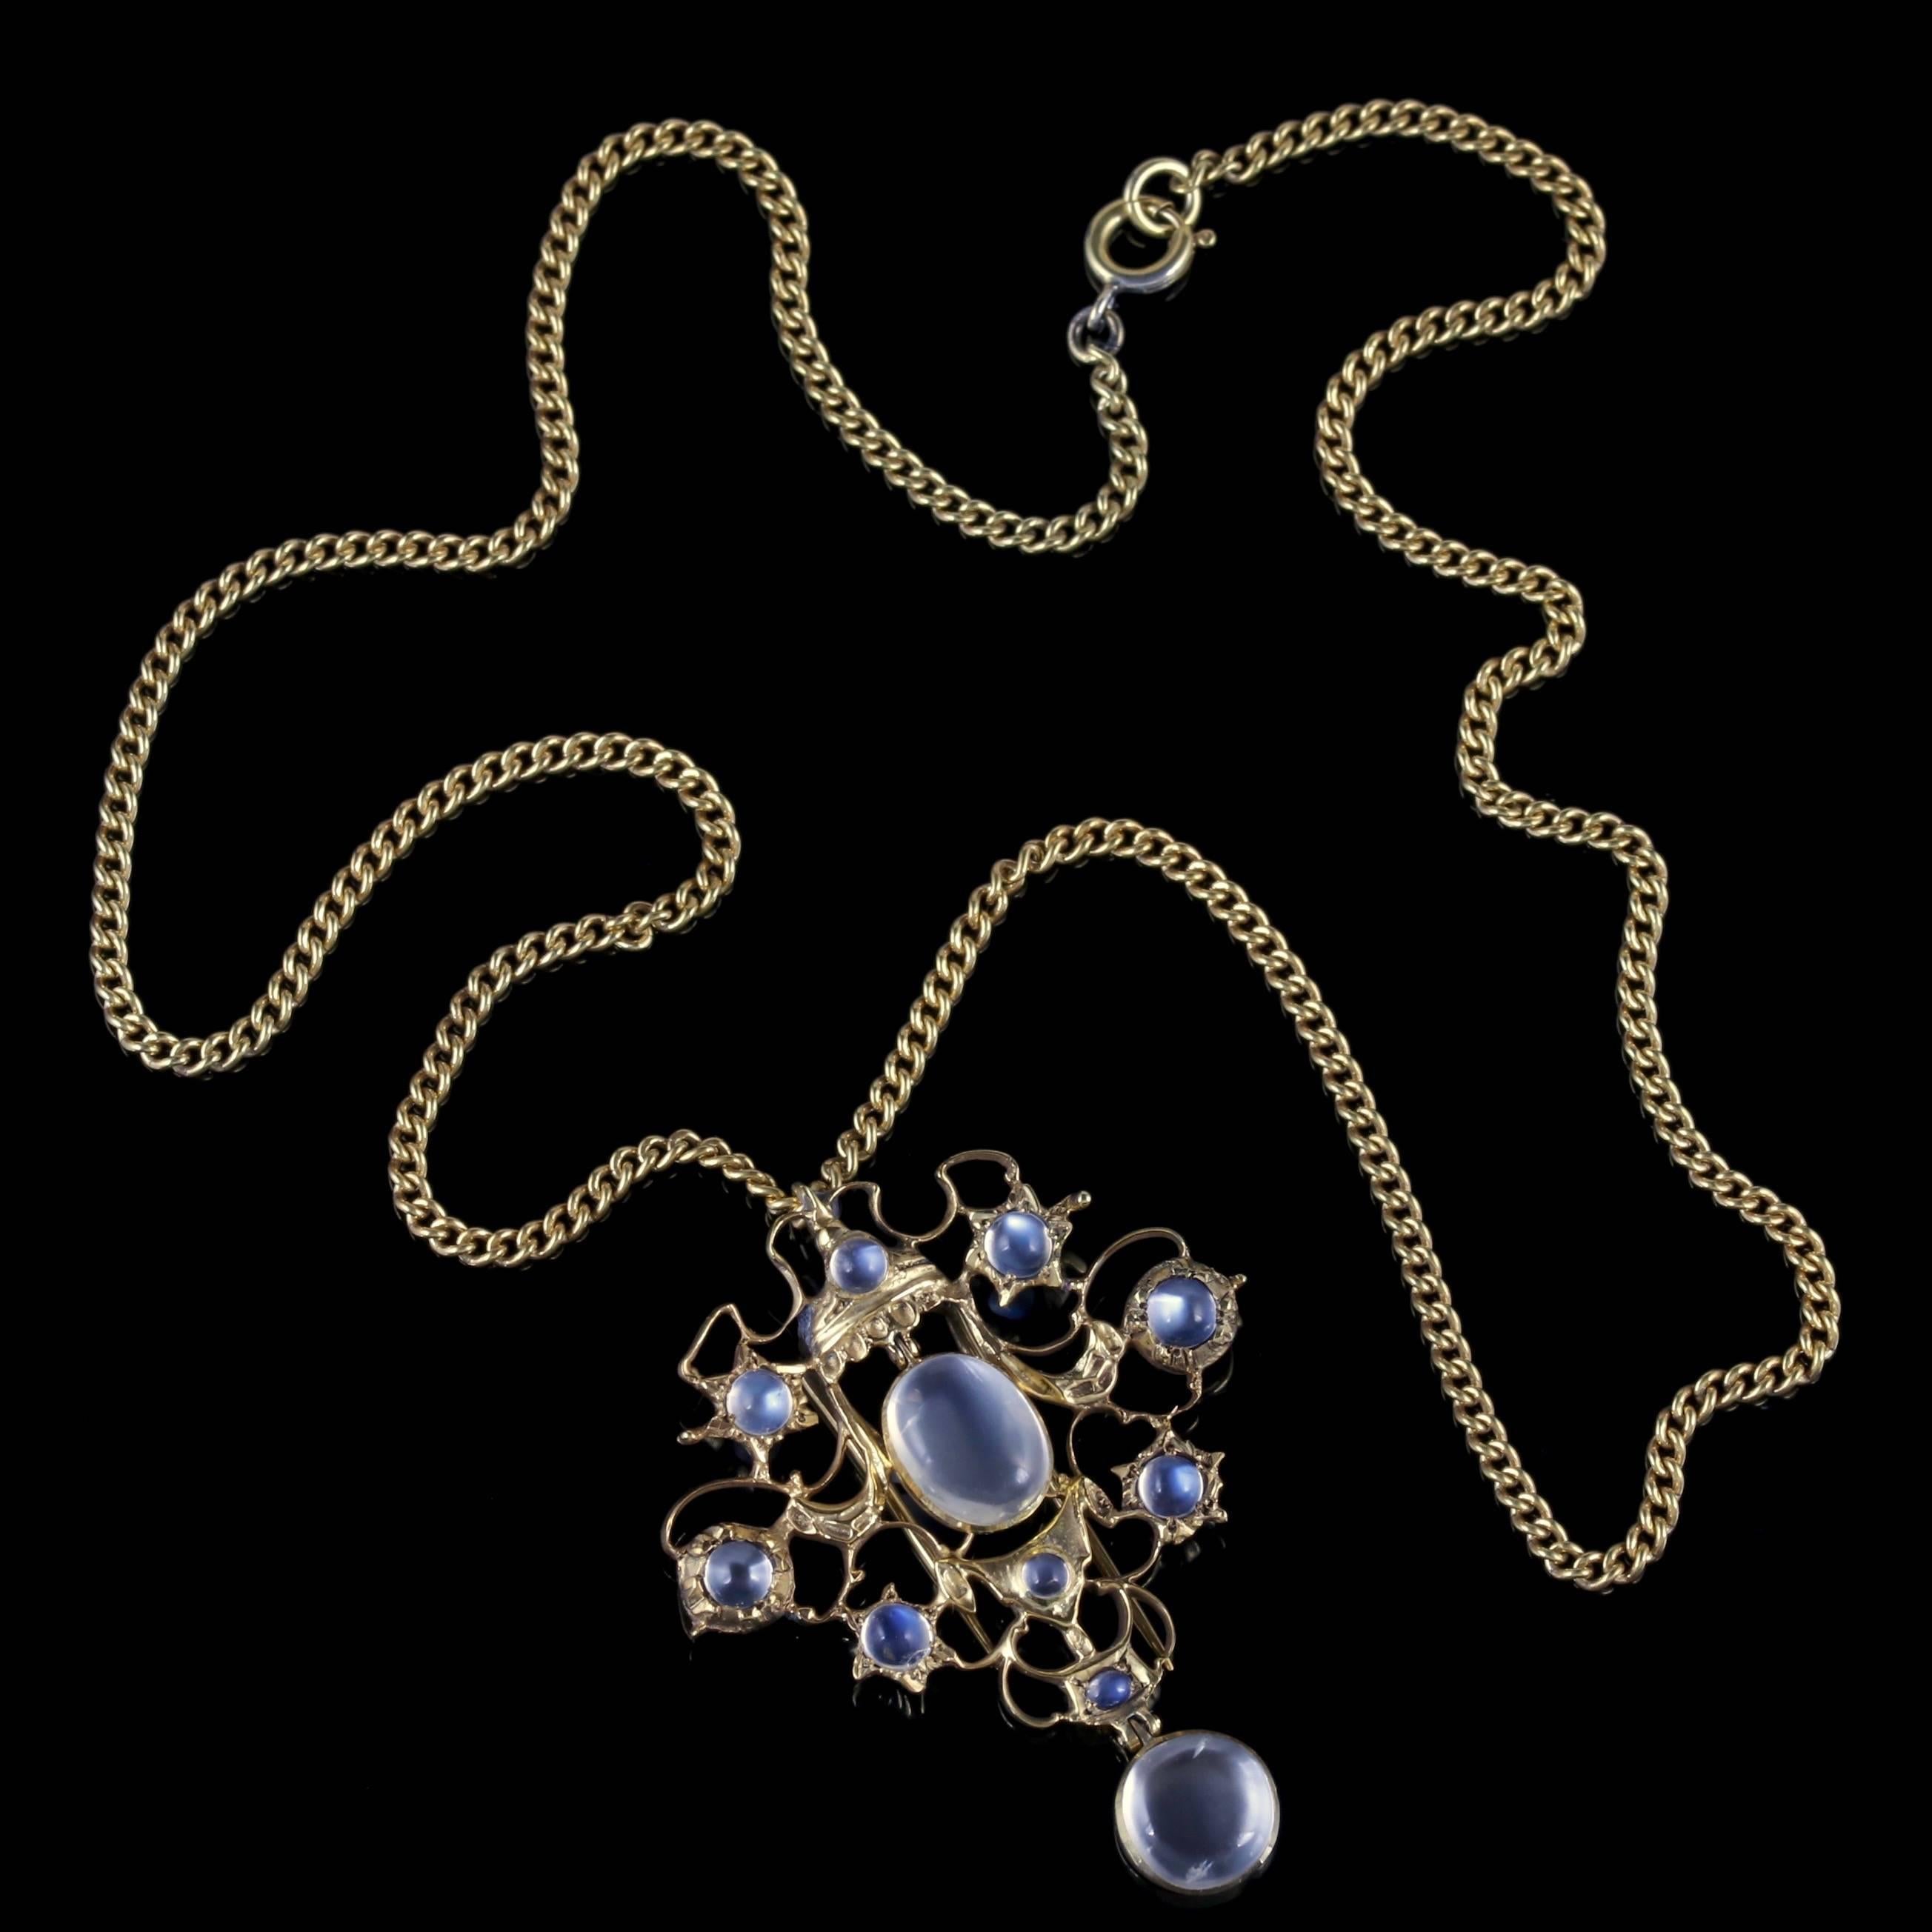 Women's Antique Victorian Moonstone Pendant Necklace Silver Gold, circa 1880